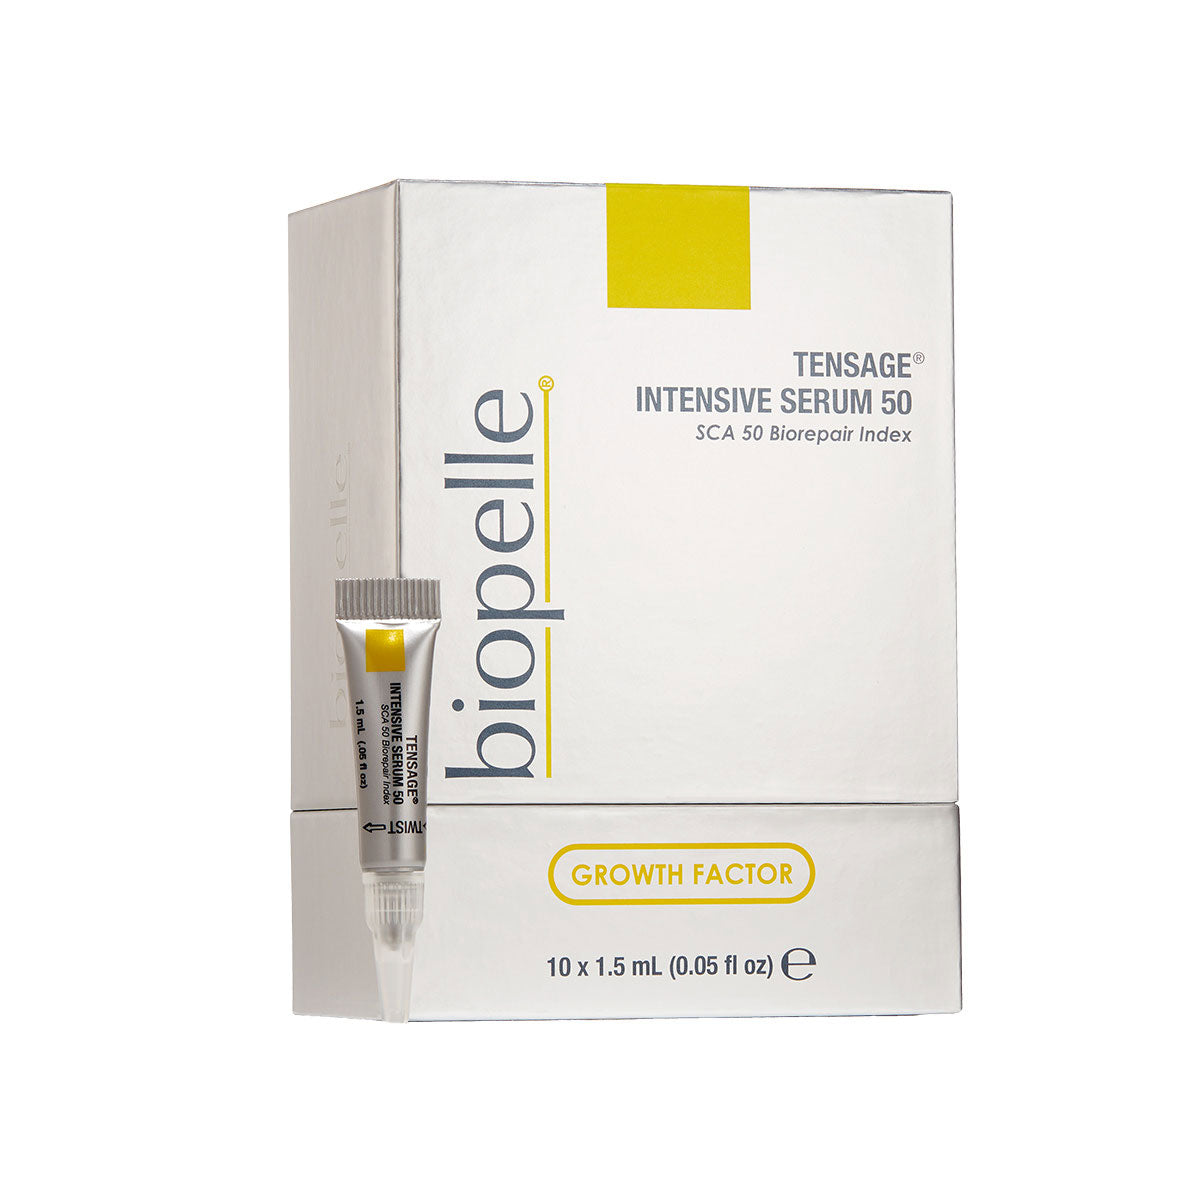 Biopelle Tensage Intensive Serum 50 (10) 1.5ml ampoules